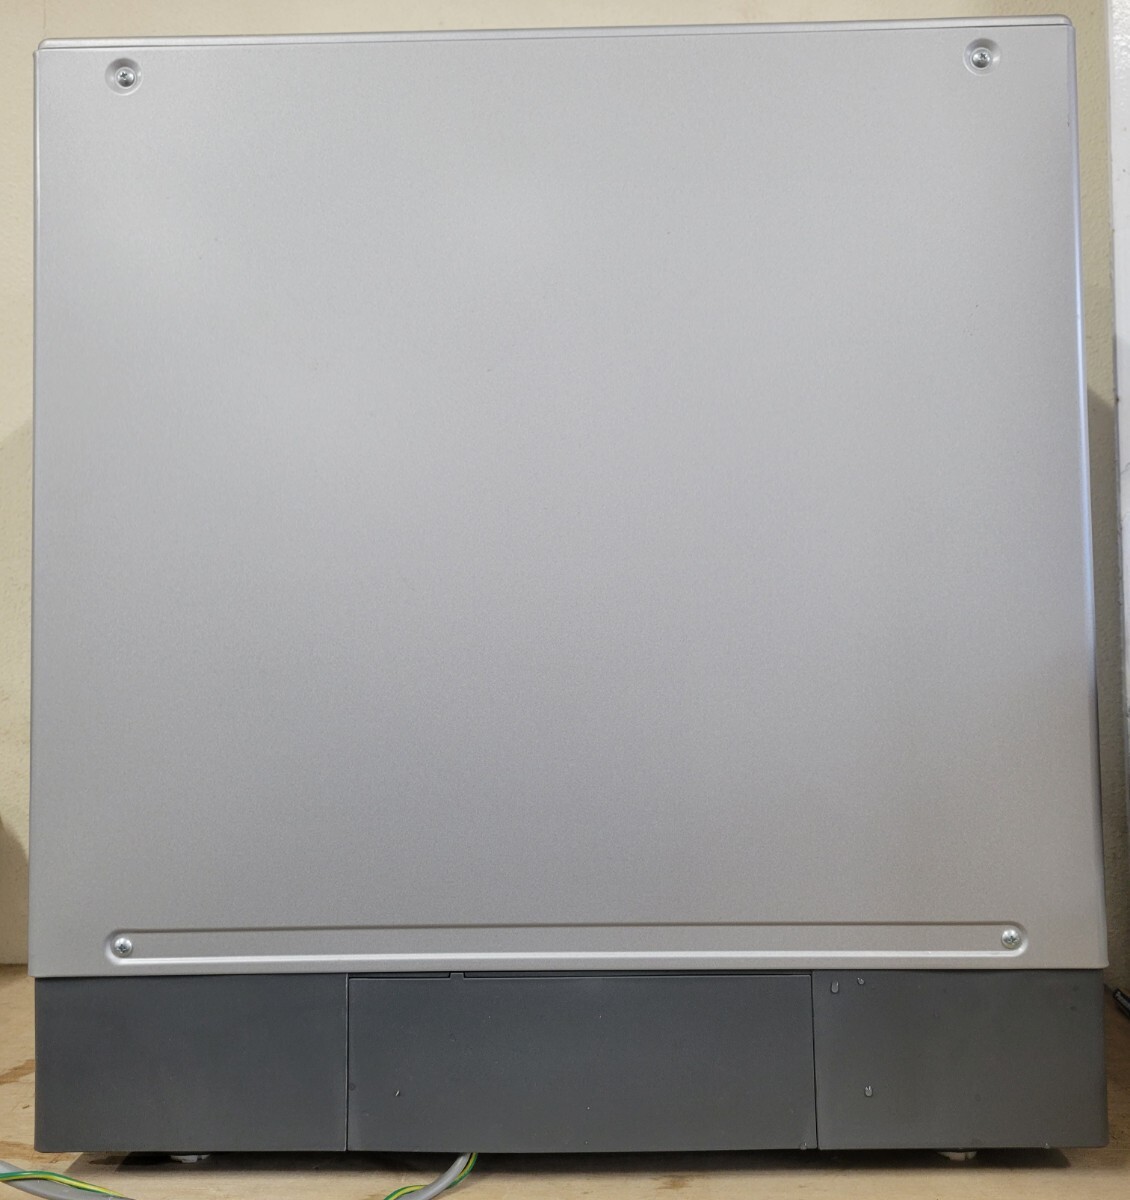 Panasonic 食器洗い乾燥機 NP-TZ200-S シルバー 2020年製 パナソニック 食洗機_画像8